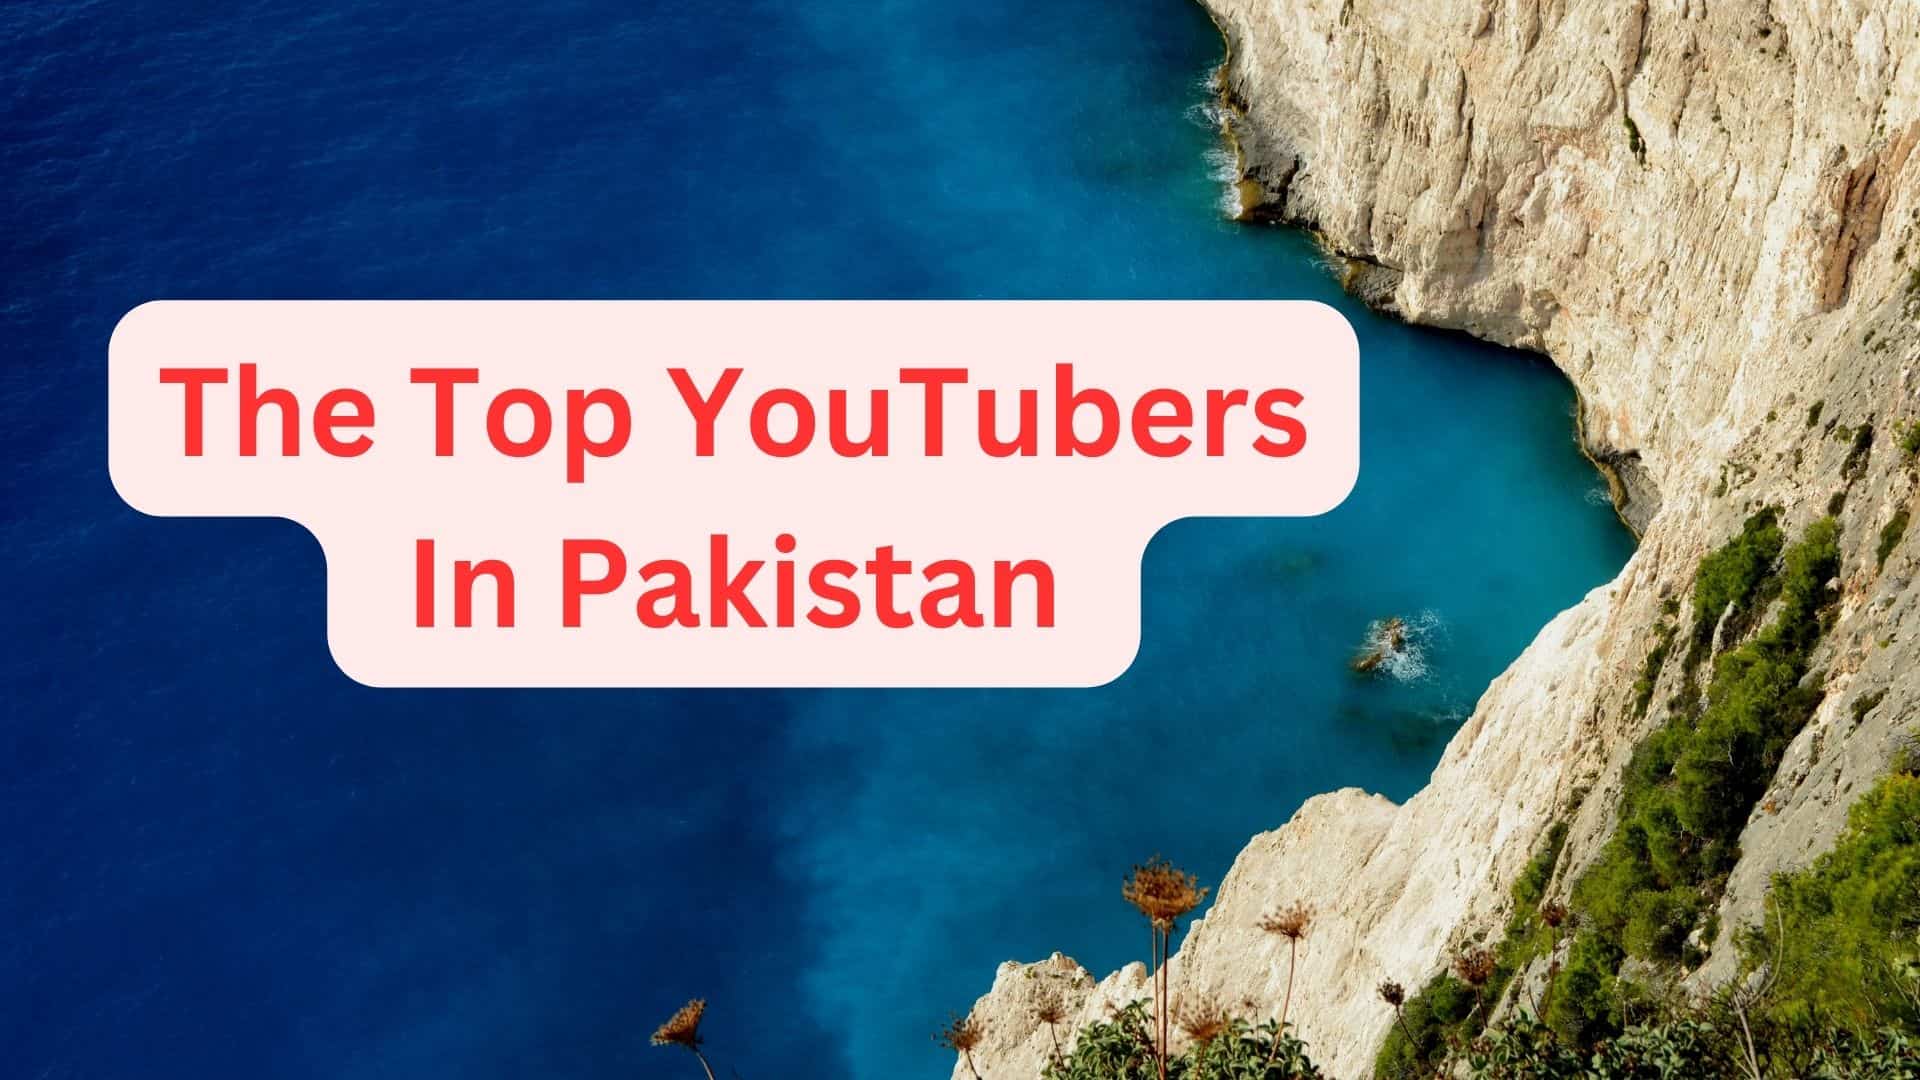 The Top YouTubers In Pakistan